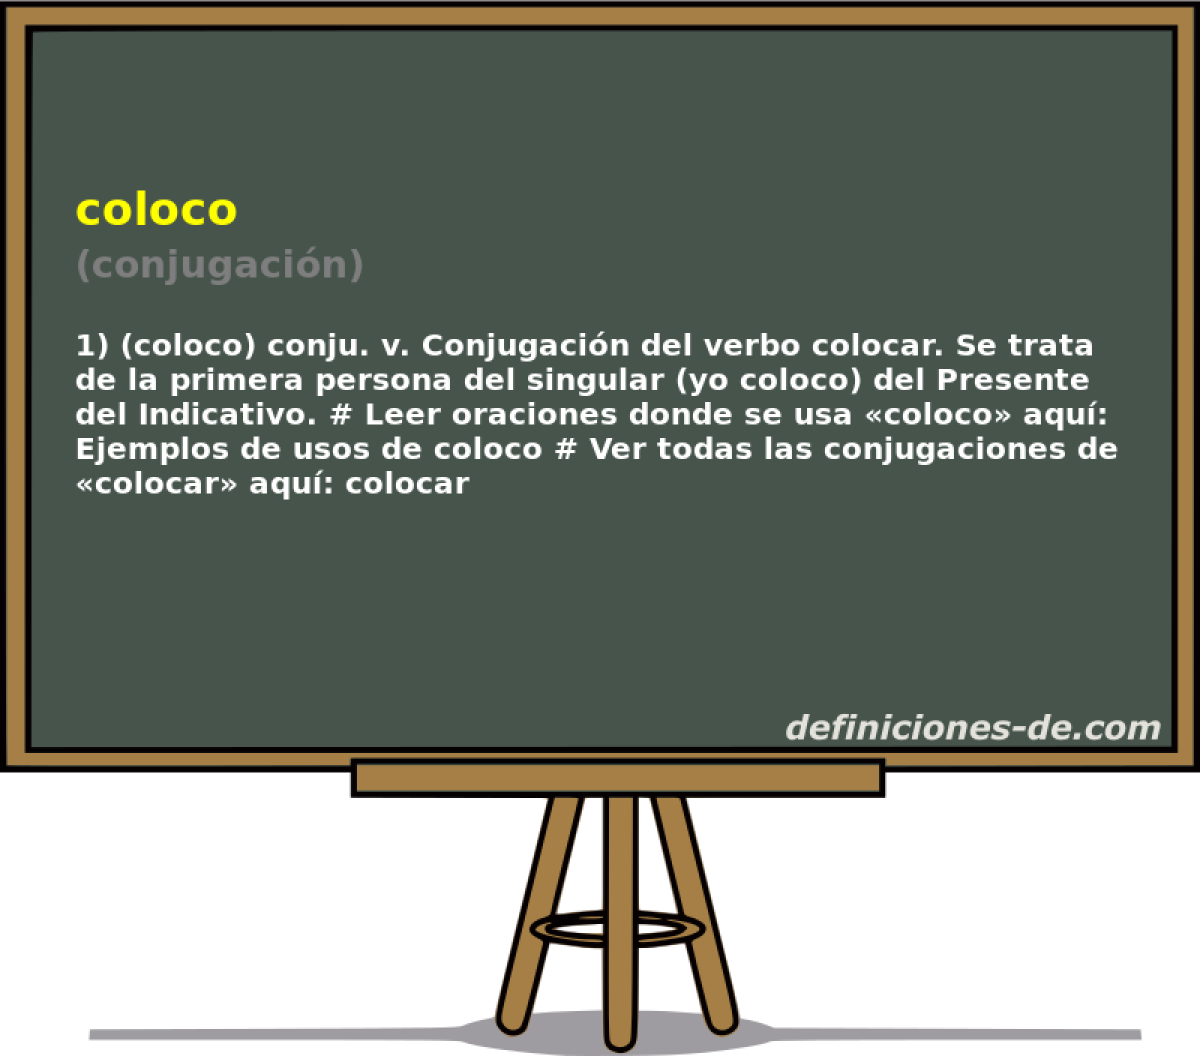 coloco (conjugacin)